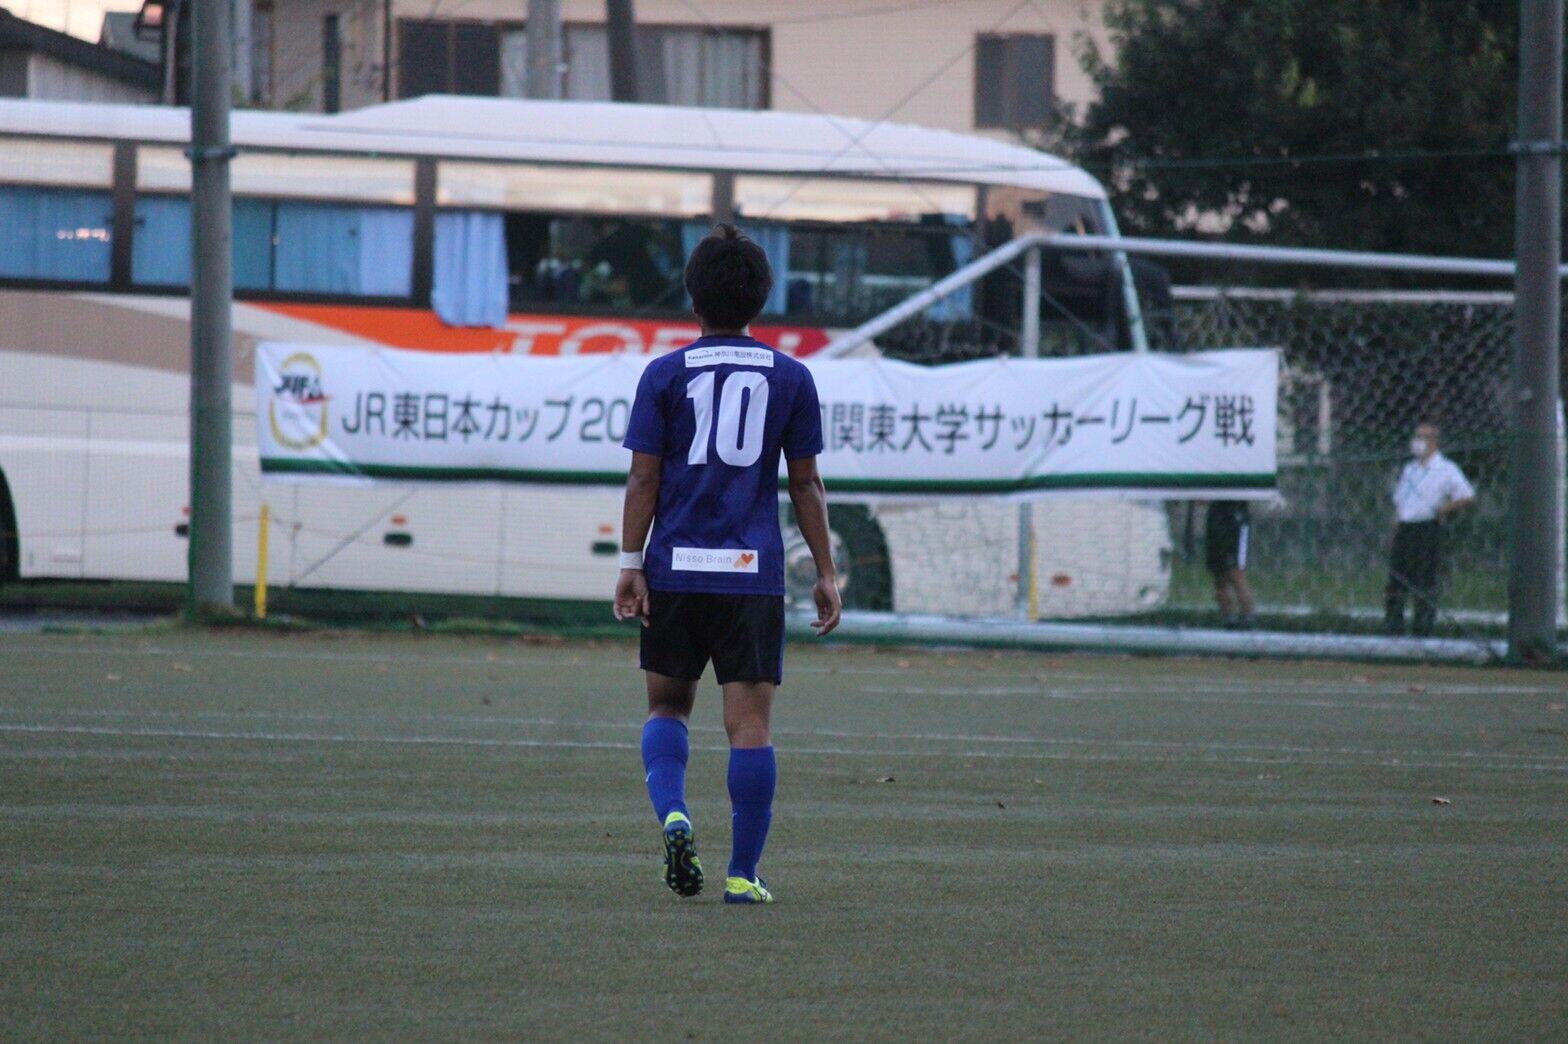 https://football.ku-sports.jp/blog/photoreport/images/20200831142950.jpg